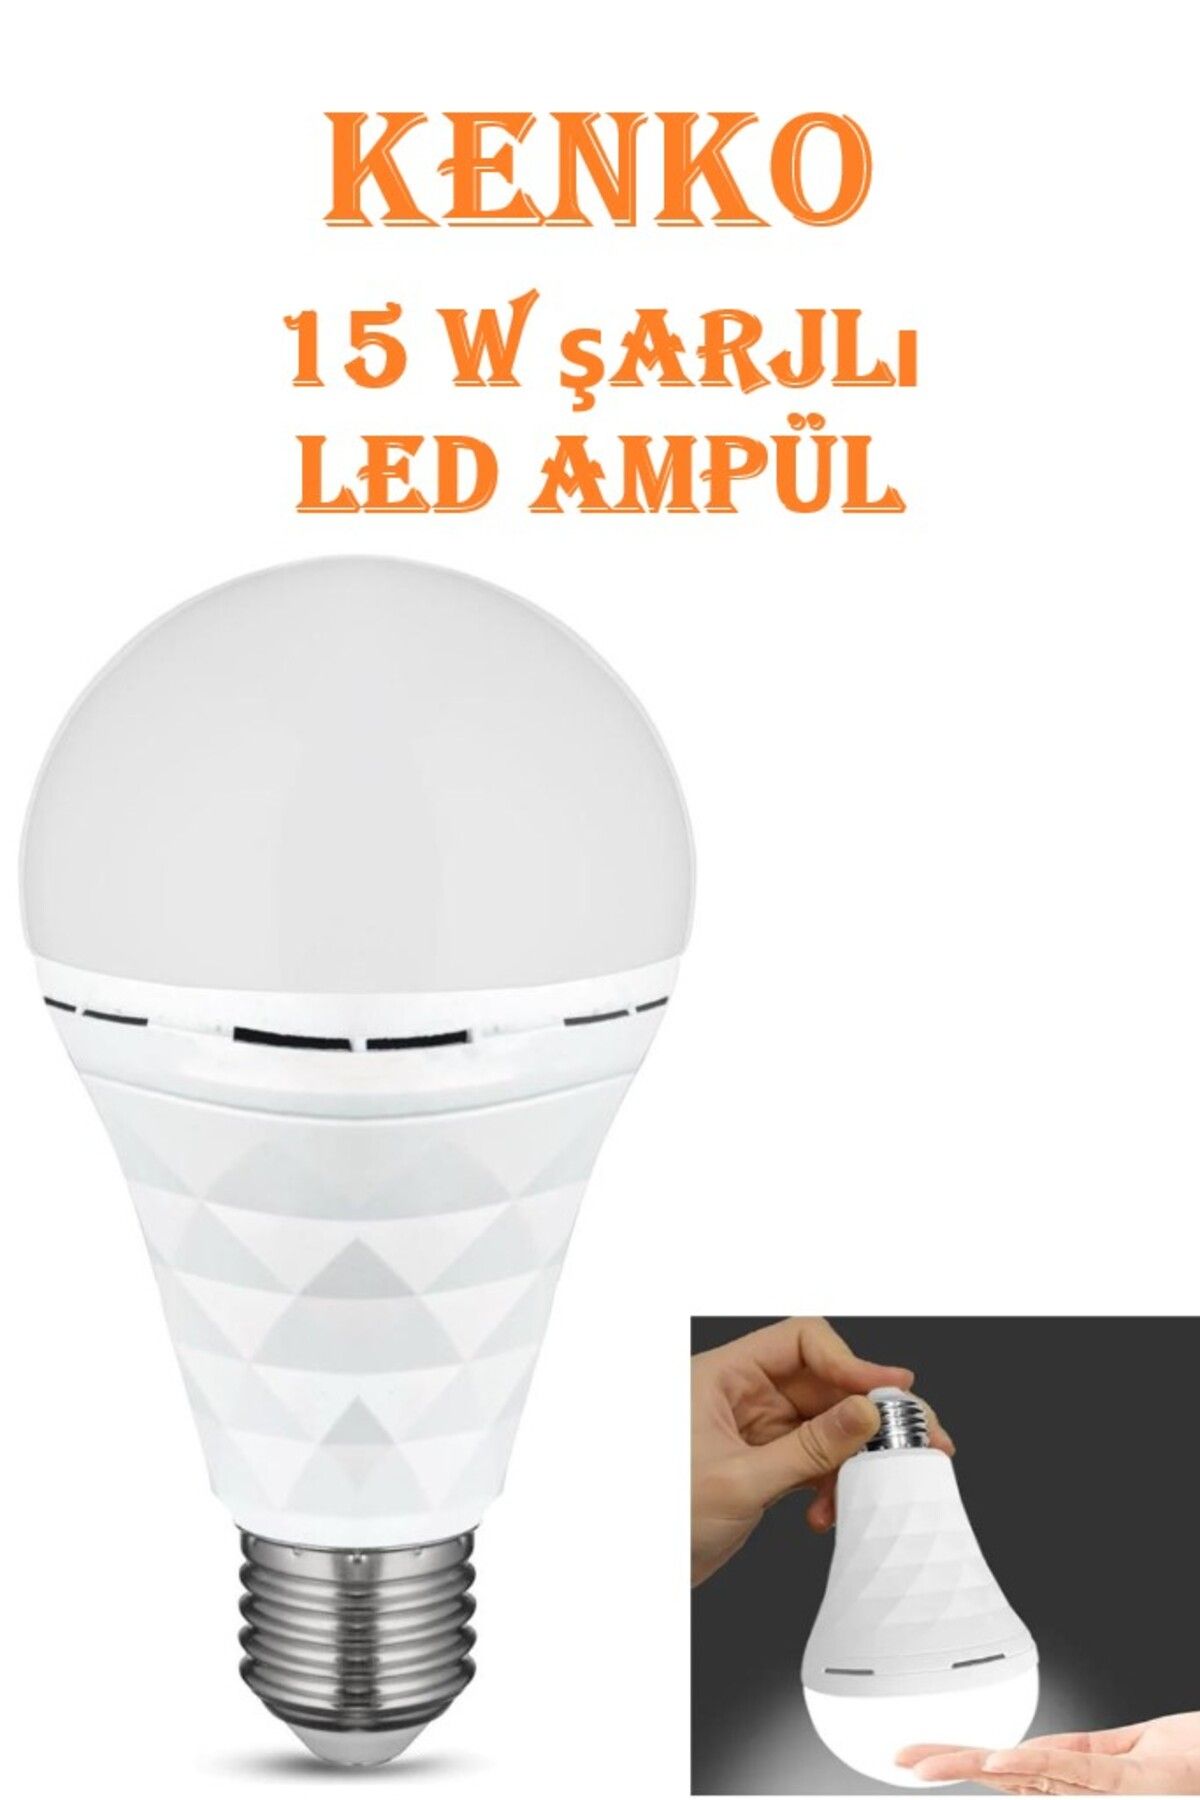 Kenko Şarjlı LED Ampül 220V 15W Beyaz Şarjlı Ampul E27